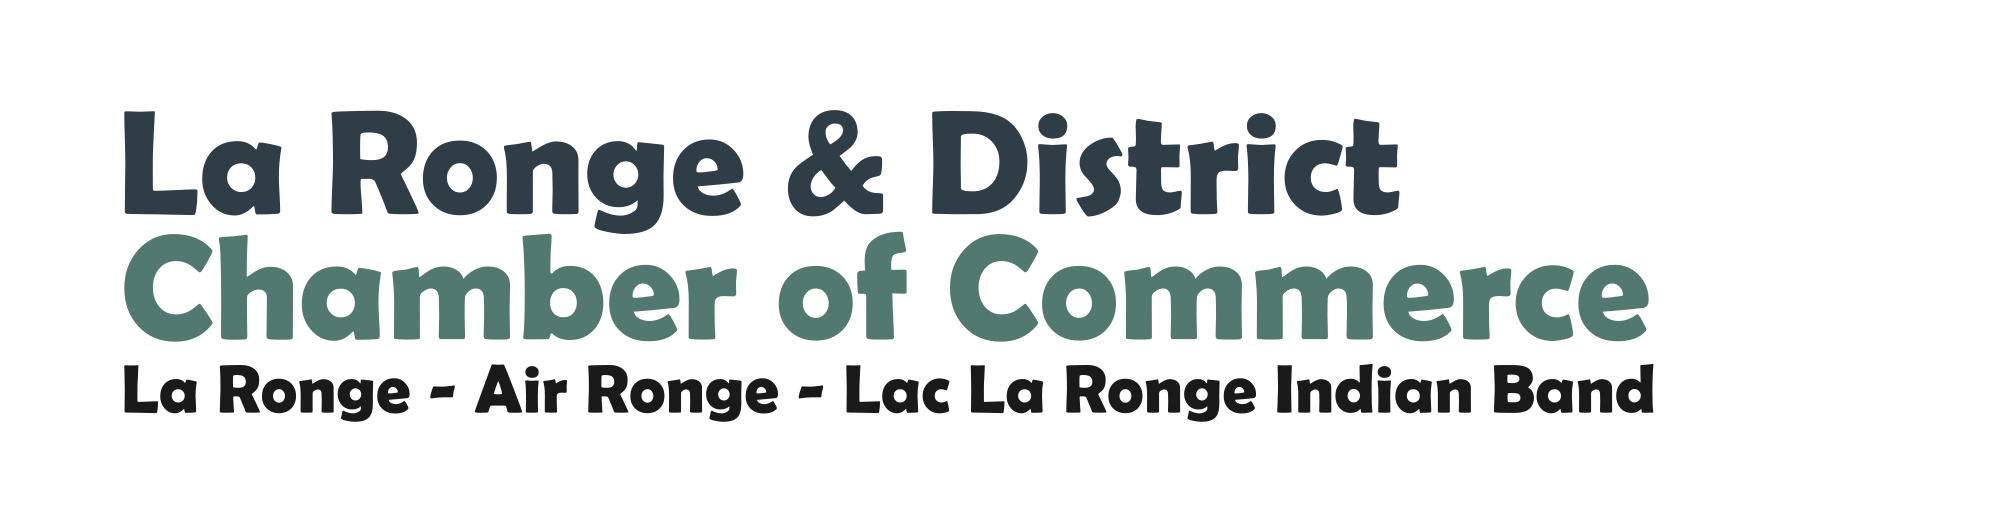 La Ronge & District Chamber of Commerce